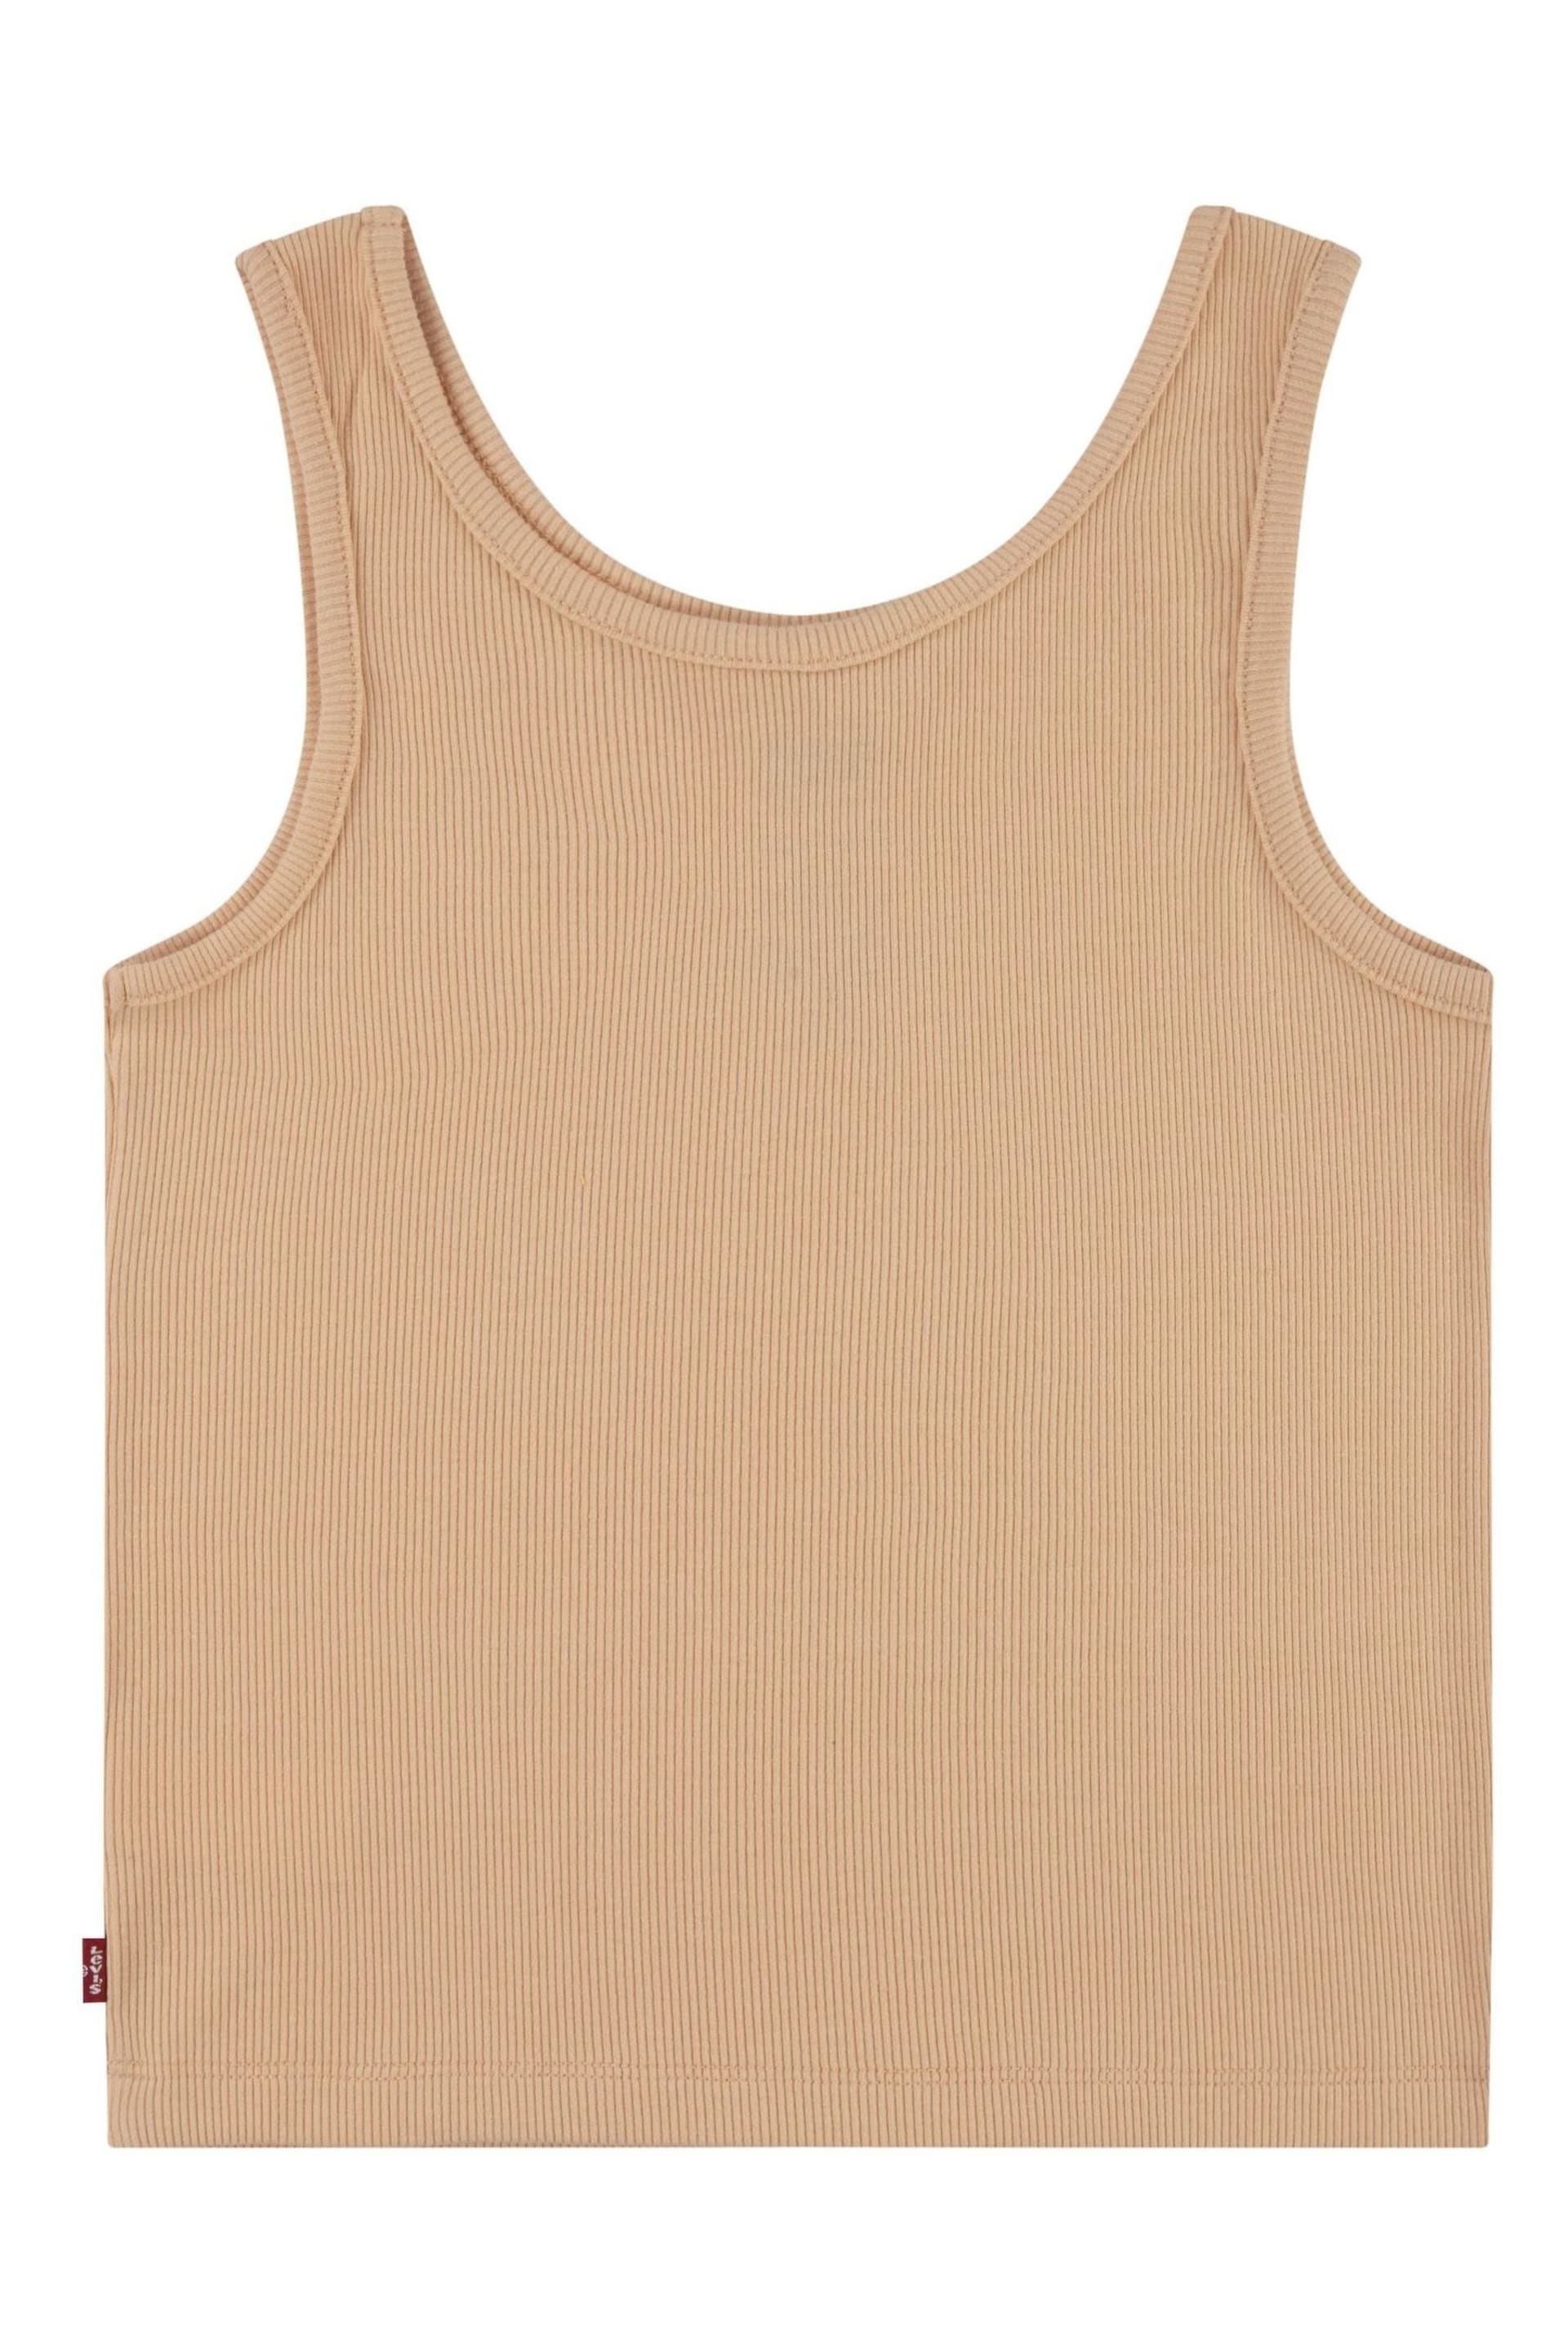 Levi's® Orange Ribbed Logo Tank Top Vest - Image 1 of 4